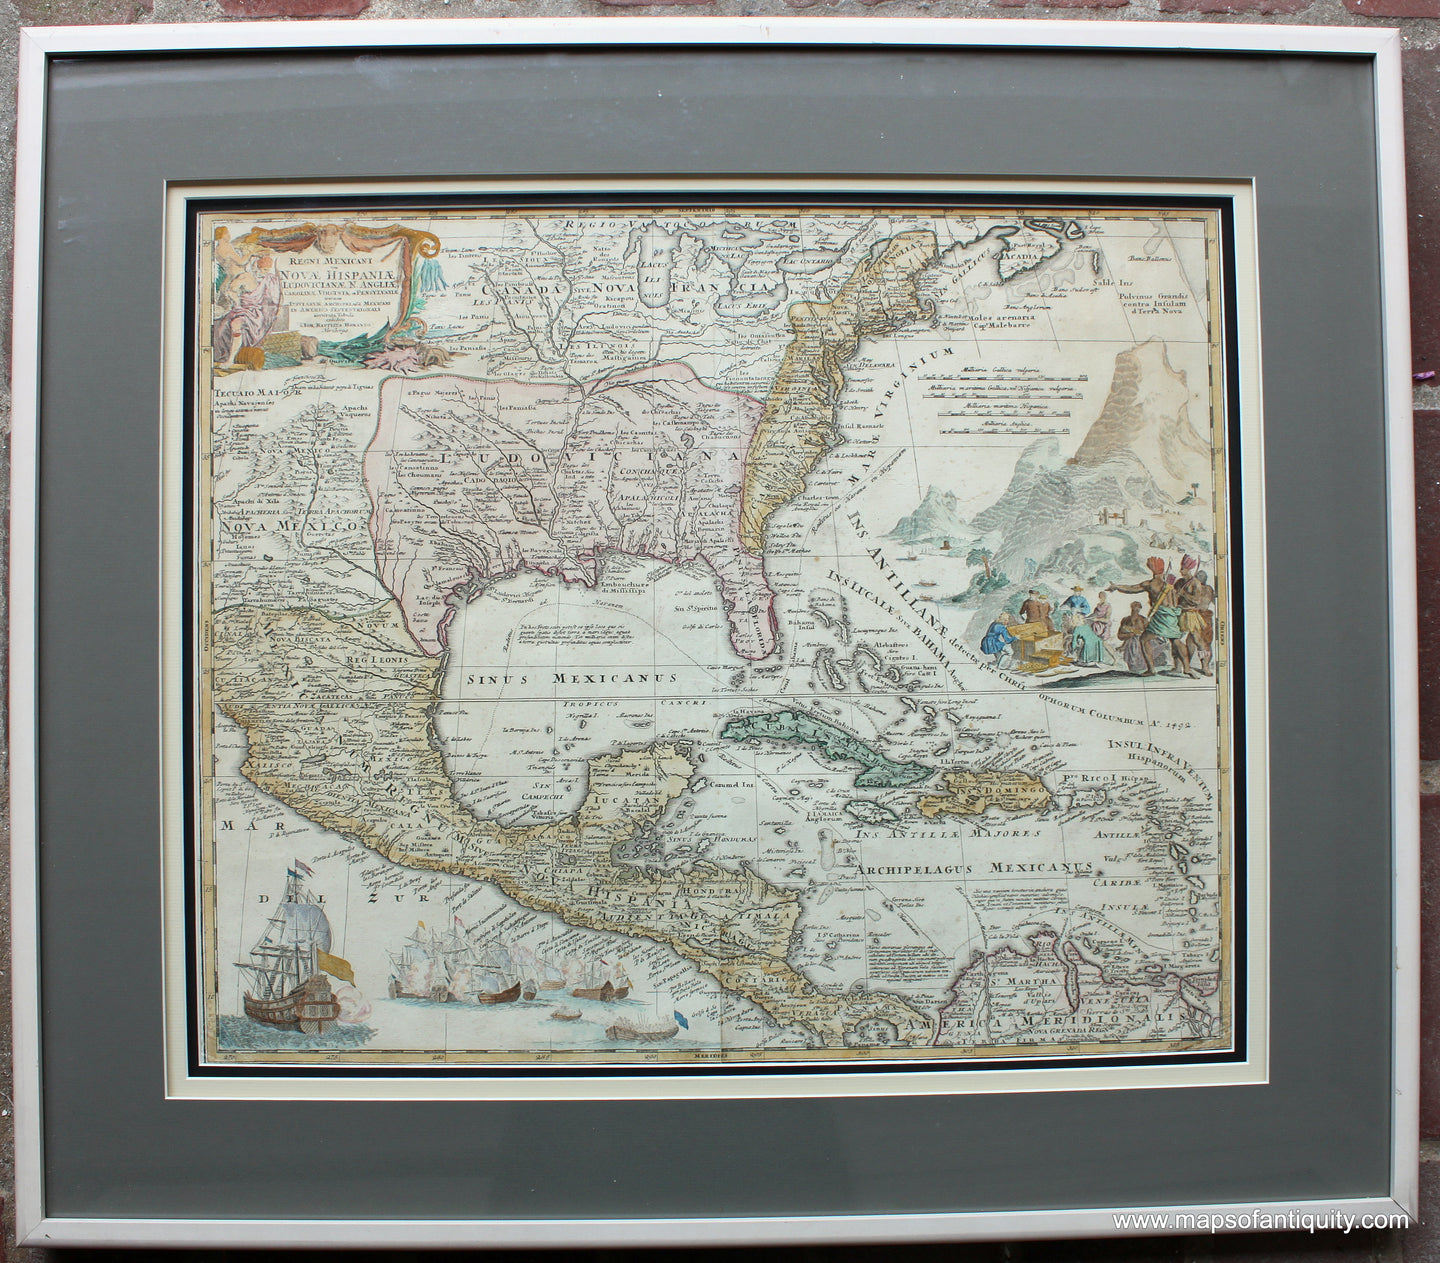 Framed-Antique-Hand-Colored-Map-North-America---******-Regni-Mexicani-seu-Novae-Hispaniae-Floridae-Novae-Angliae-Carolinae-Virginiae-et-Pensylvaniae-nec-non-Insularum-Archipelagi-Mexicani-in-America-Septentrionali-Accurata-Tabula-North-America--1715-Homann-Maps-Of-Antiquity